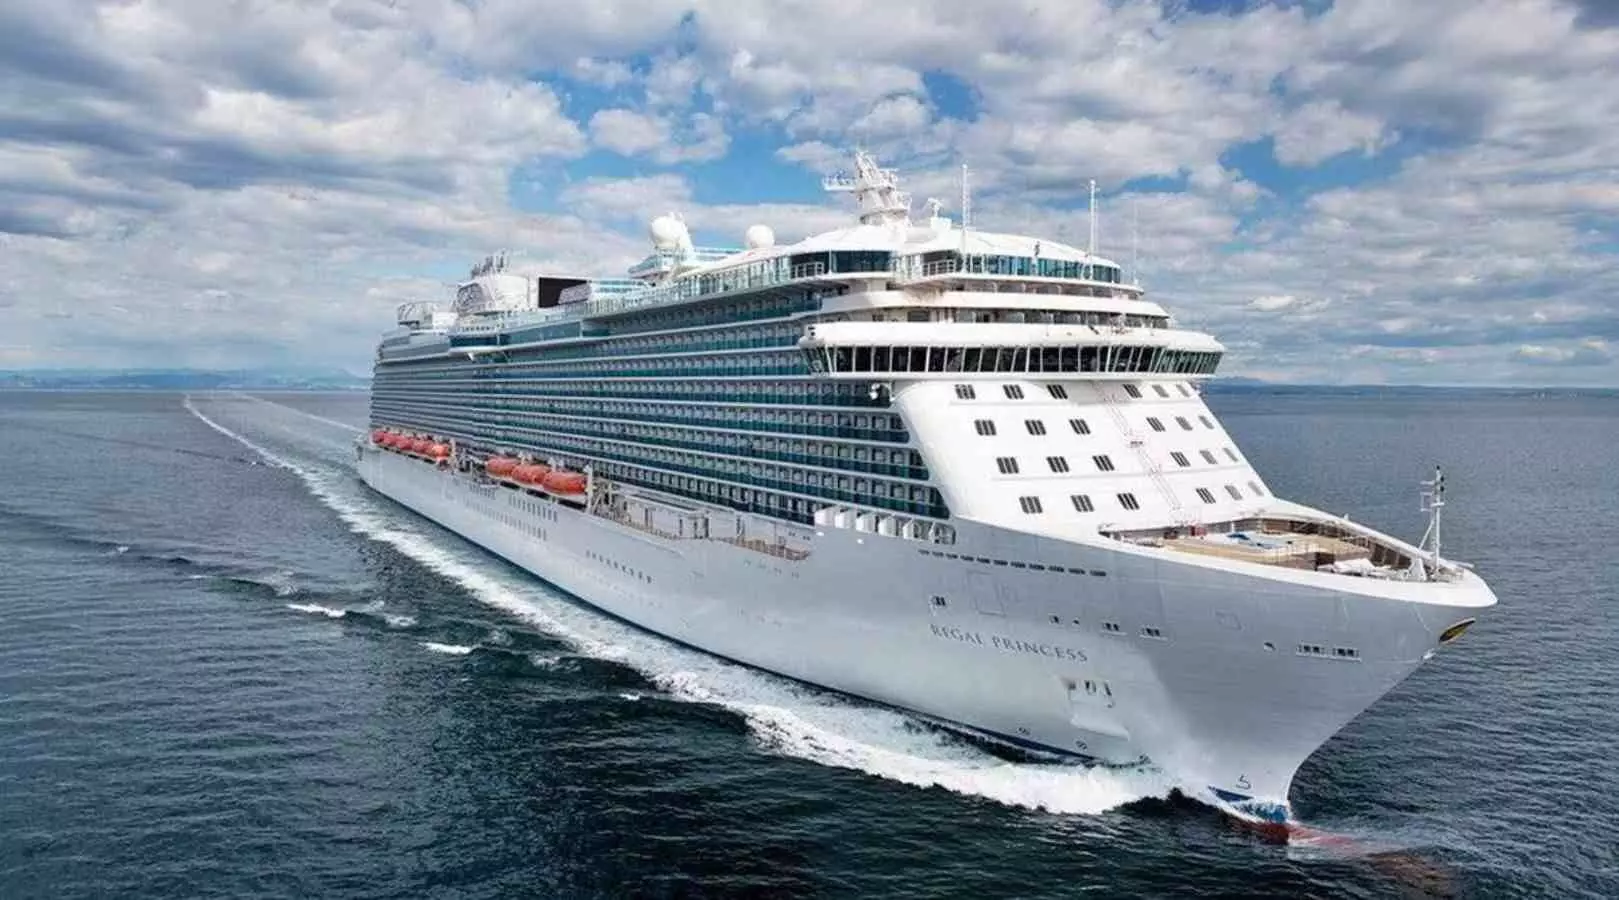 australia holiday cruise ship docks in sydney 800 passenger corona positive officials said high risk